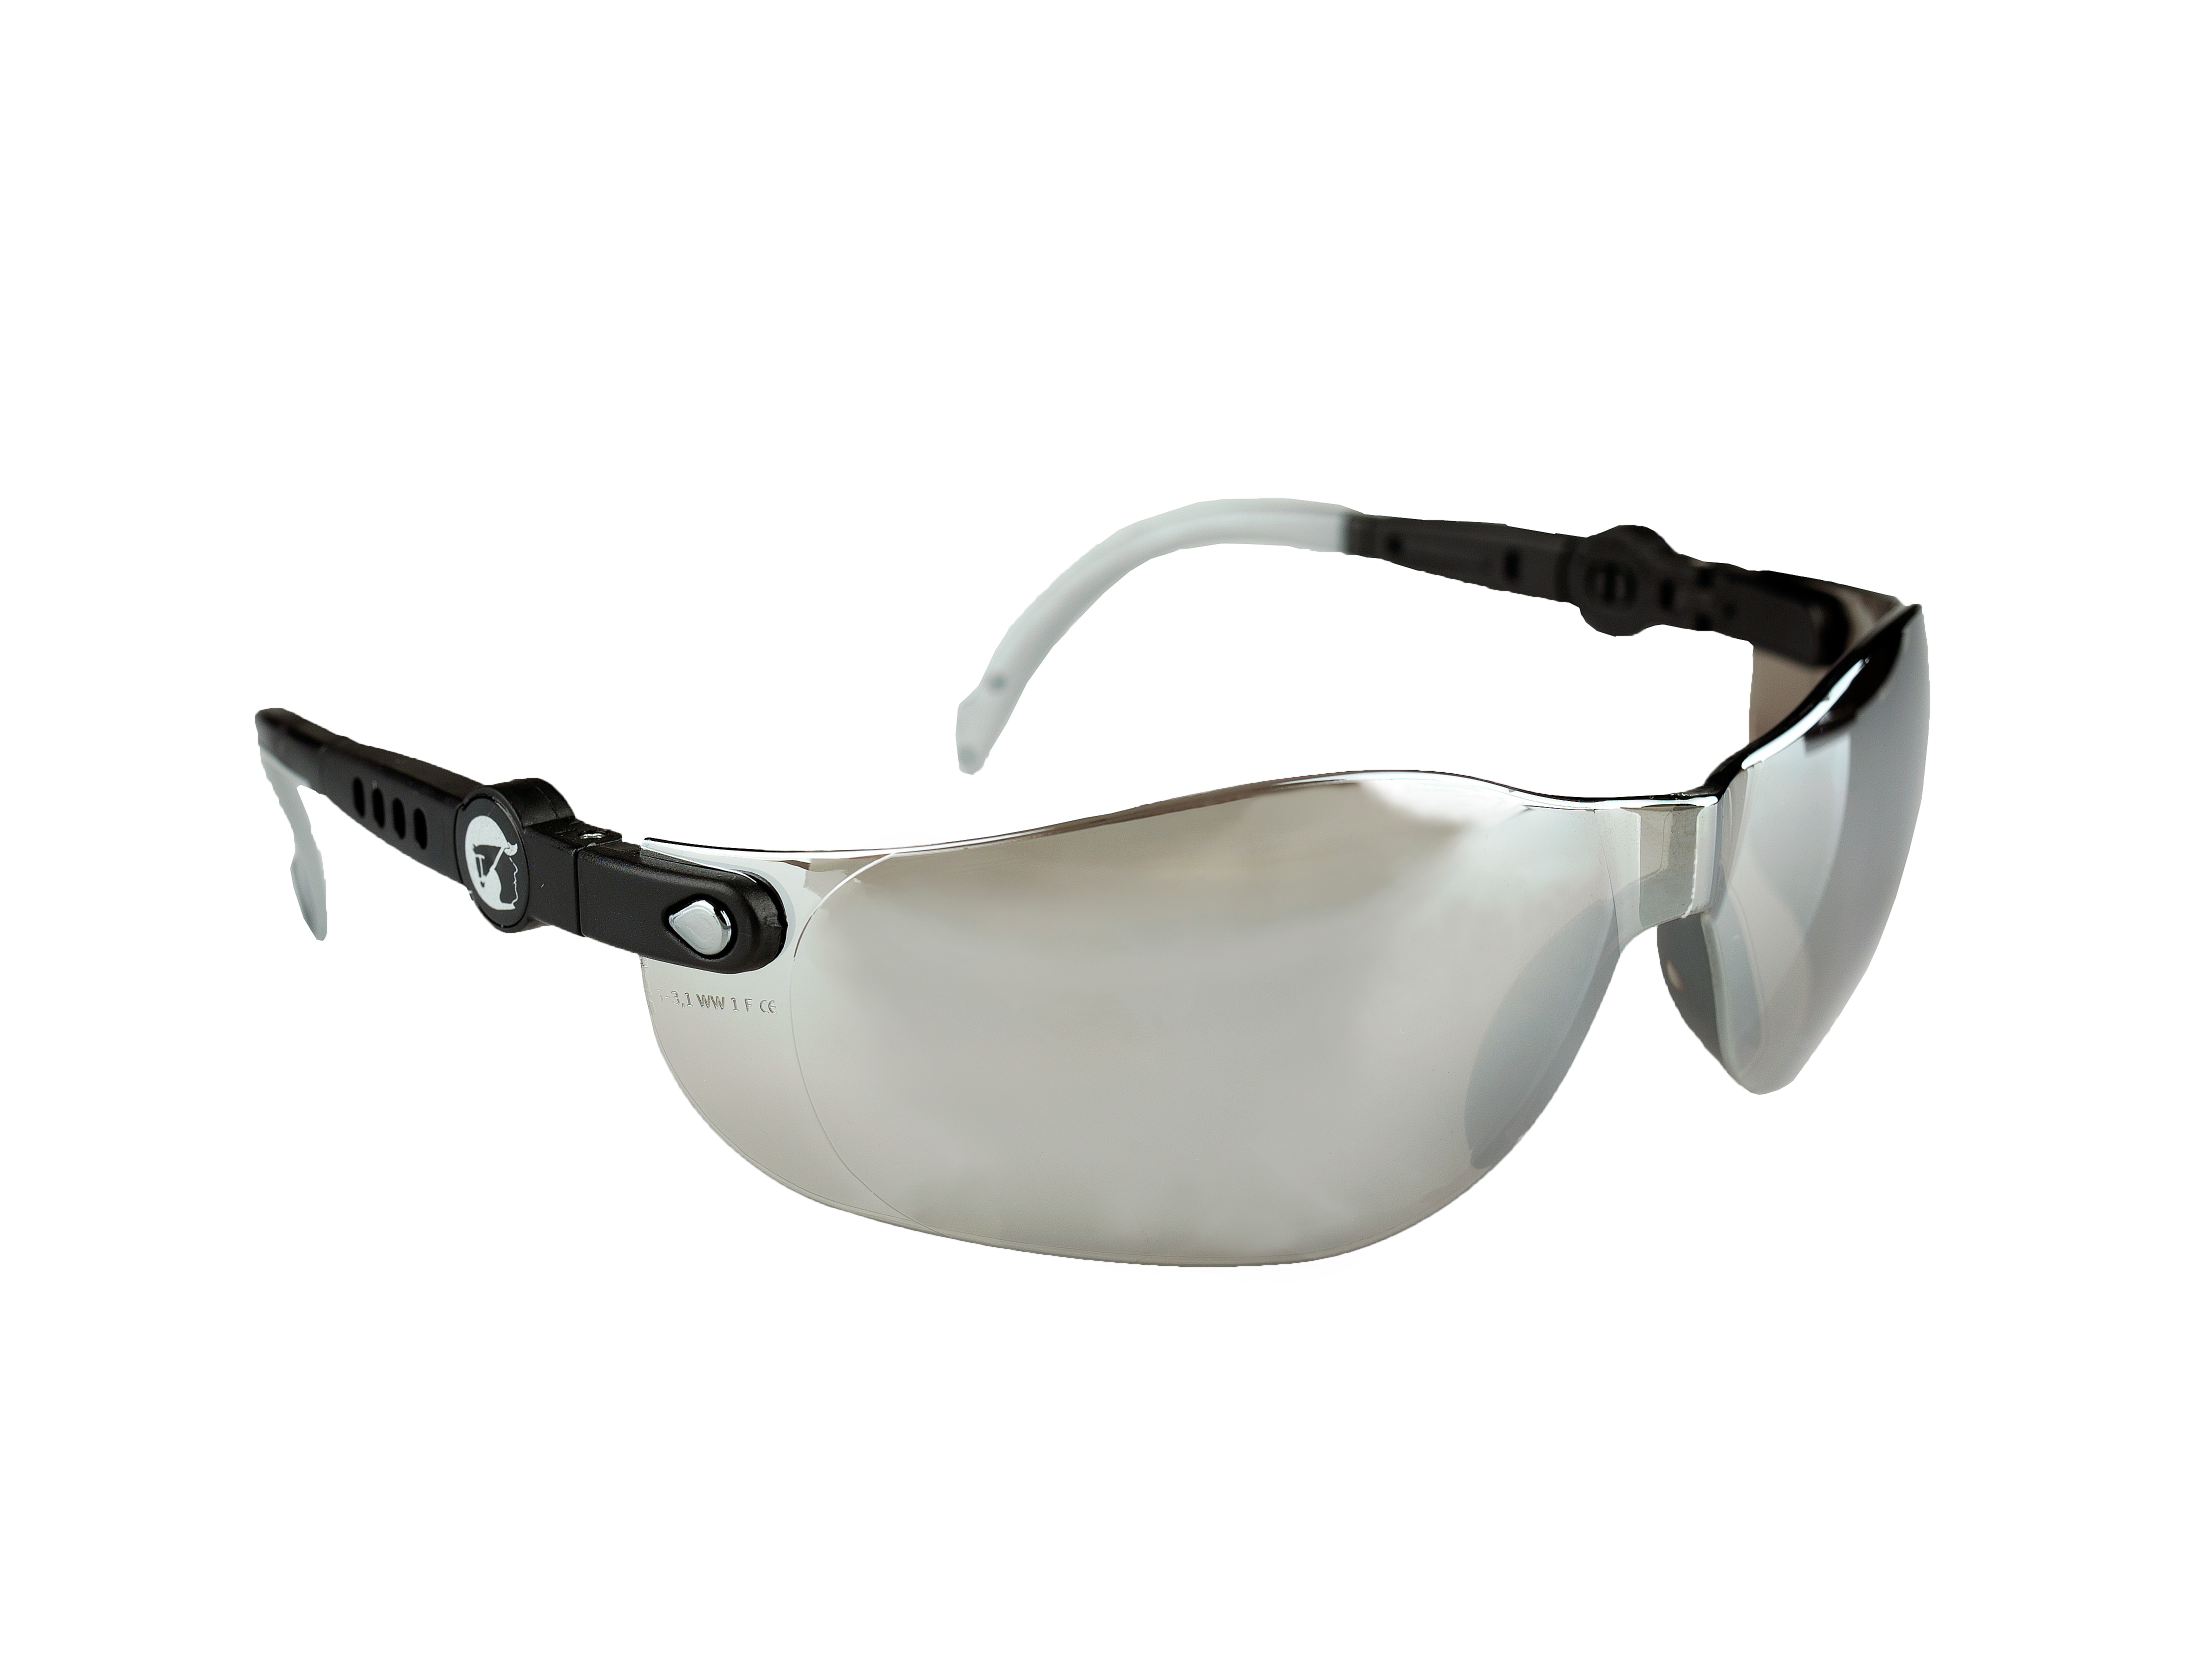 Pro justerbare kjørebriller